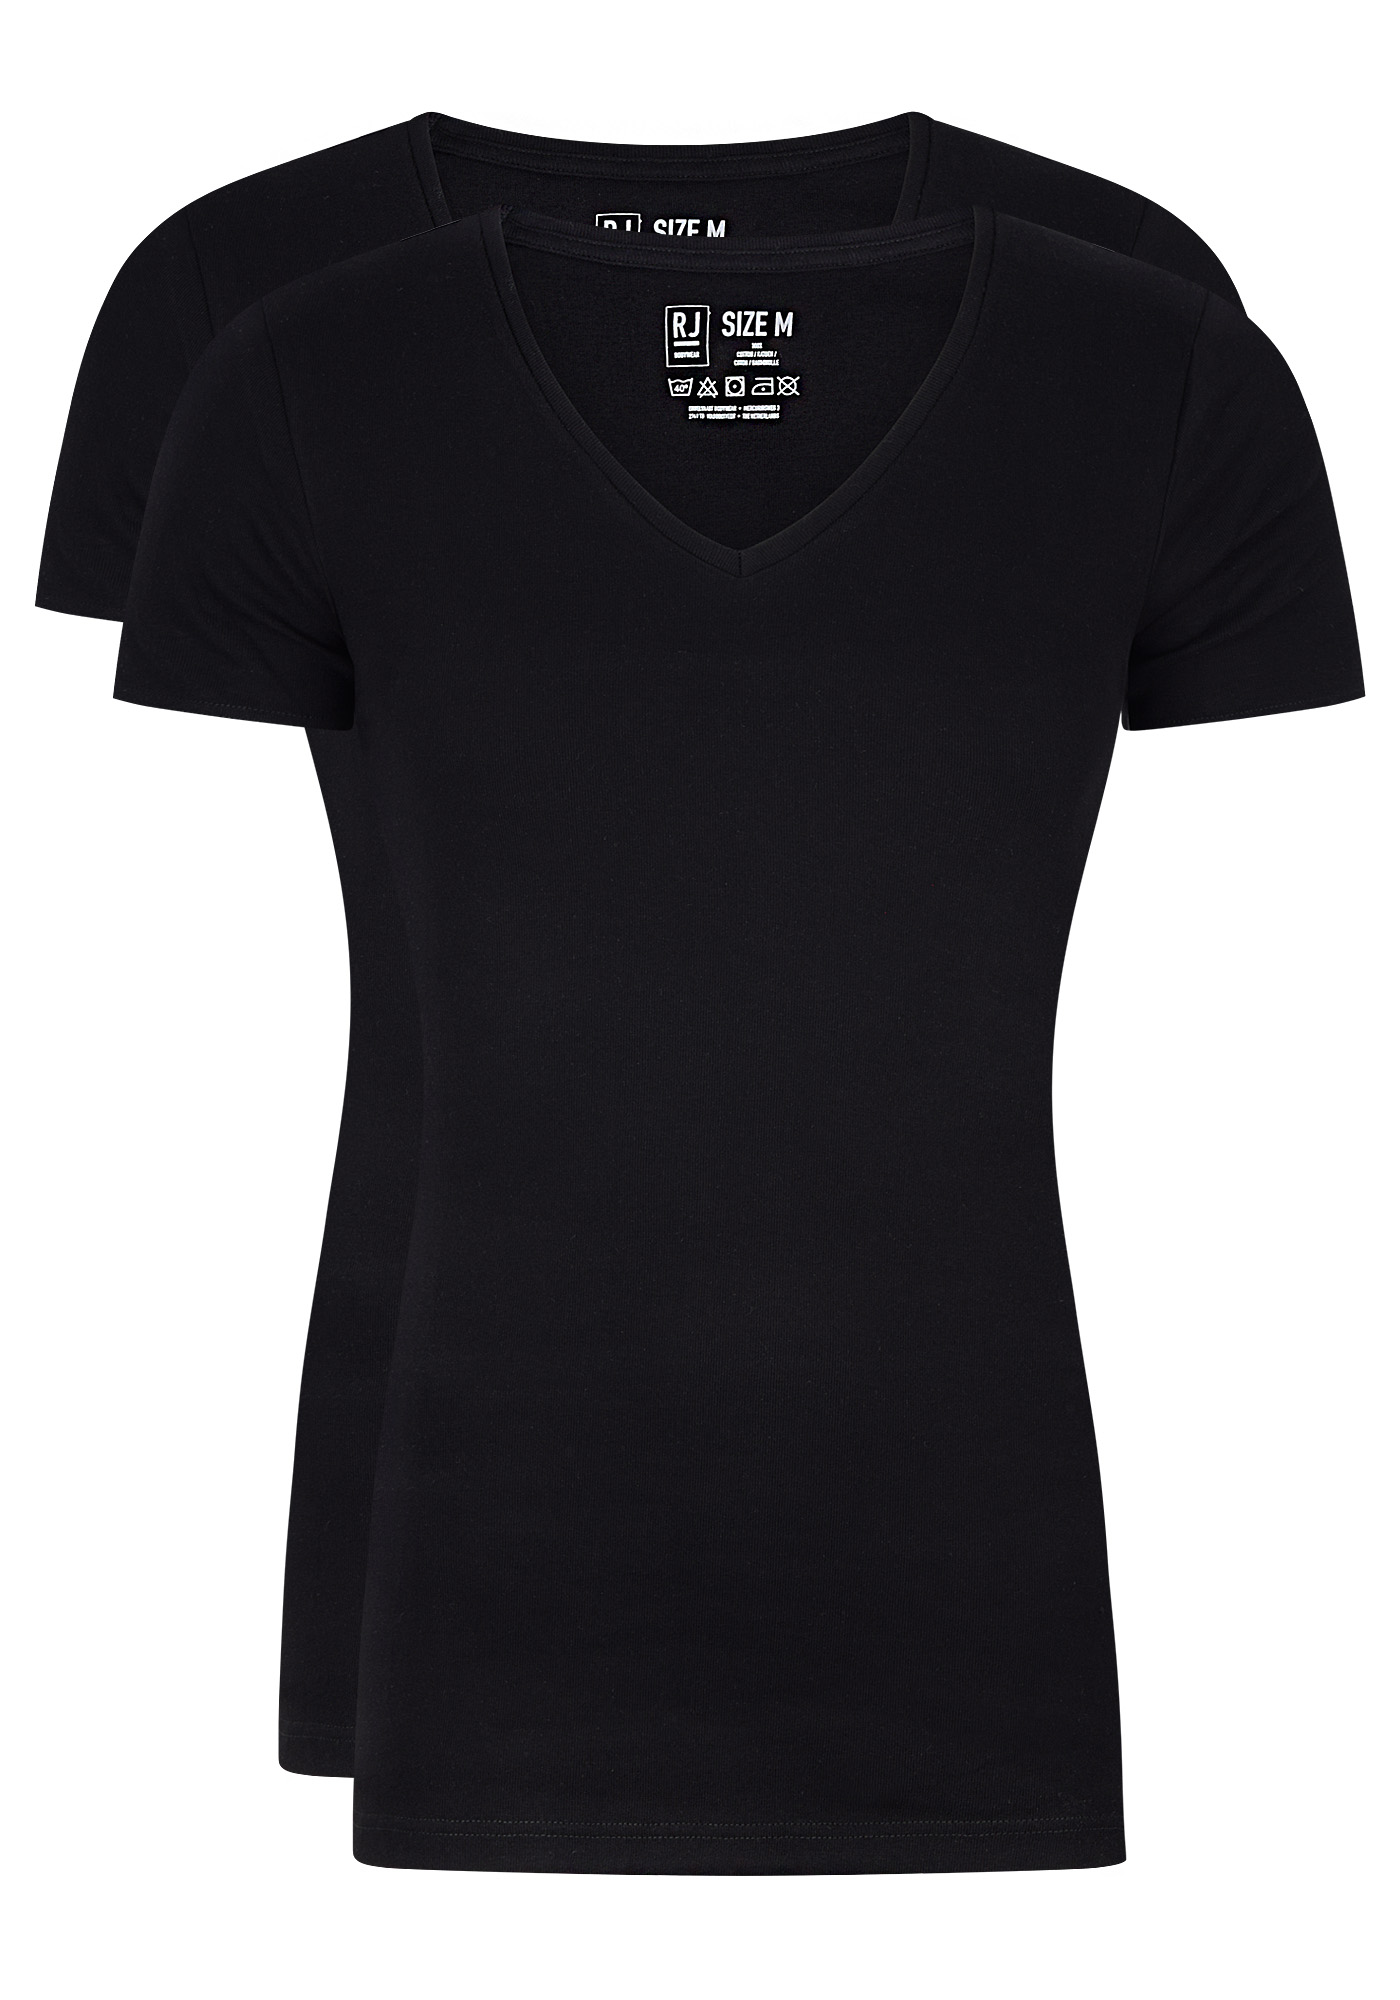 RJ Bodywear Everyday Alkmaar T-shirts (2-pack), heren rib T-shirts diepe V-hals, zwart